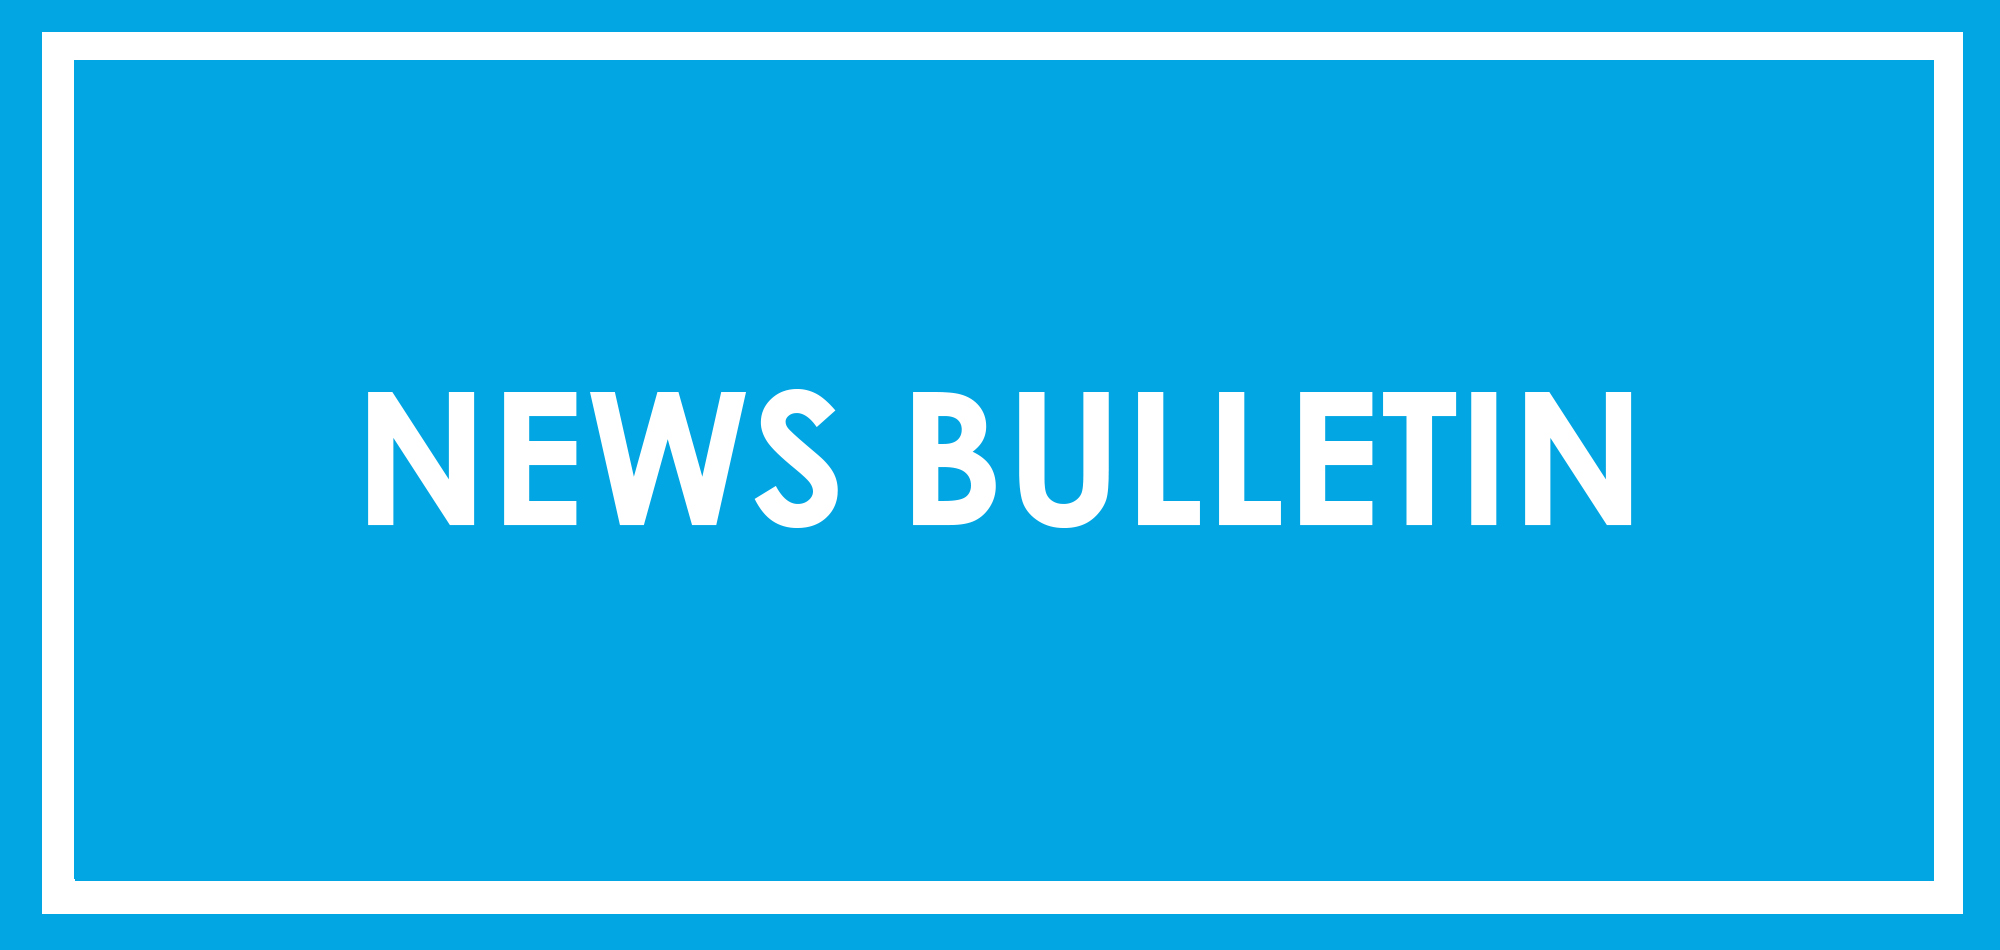 News Bulletin - 02.04.20